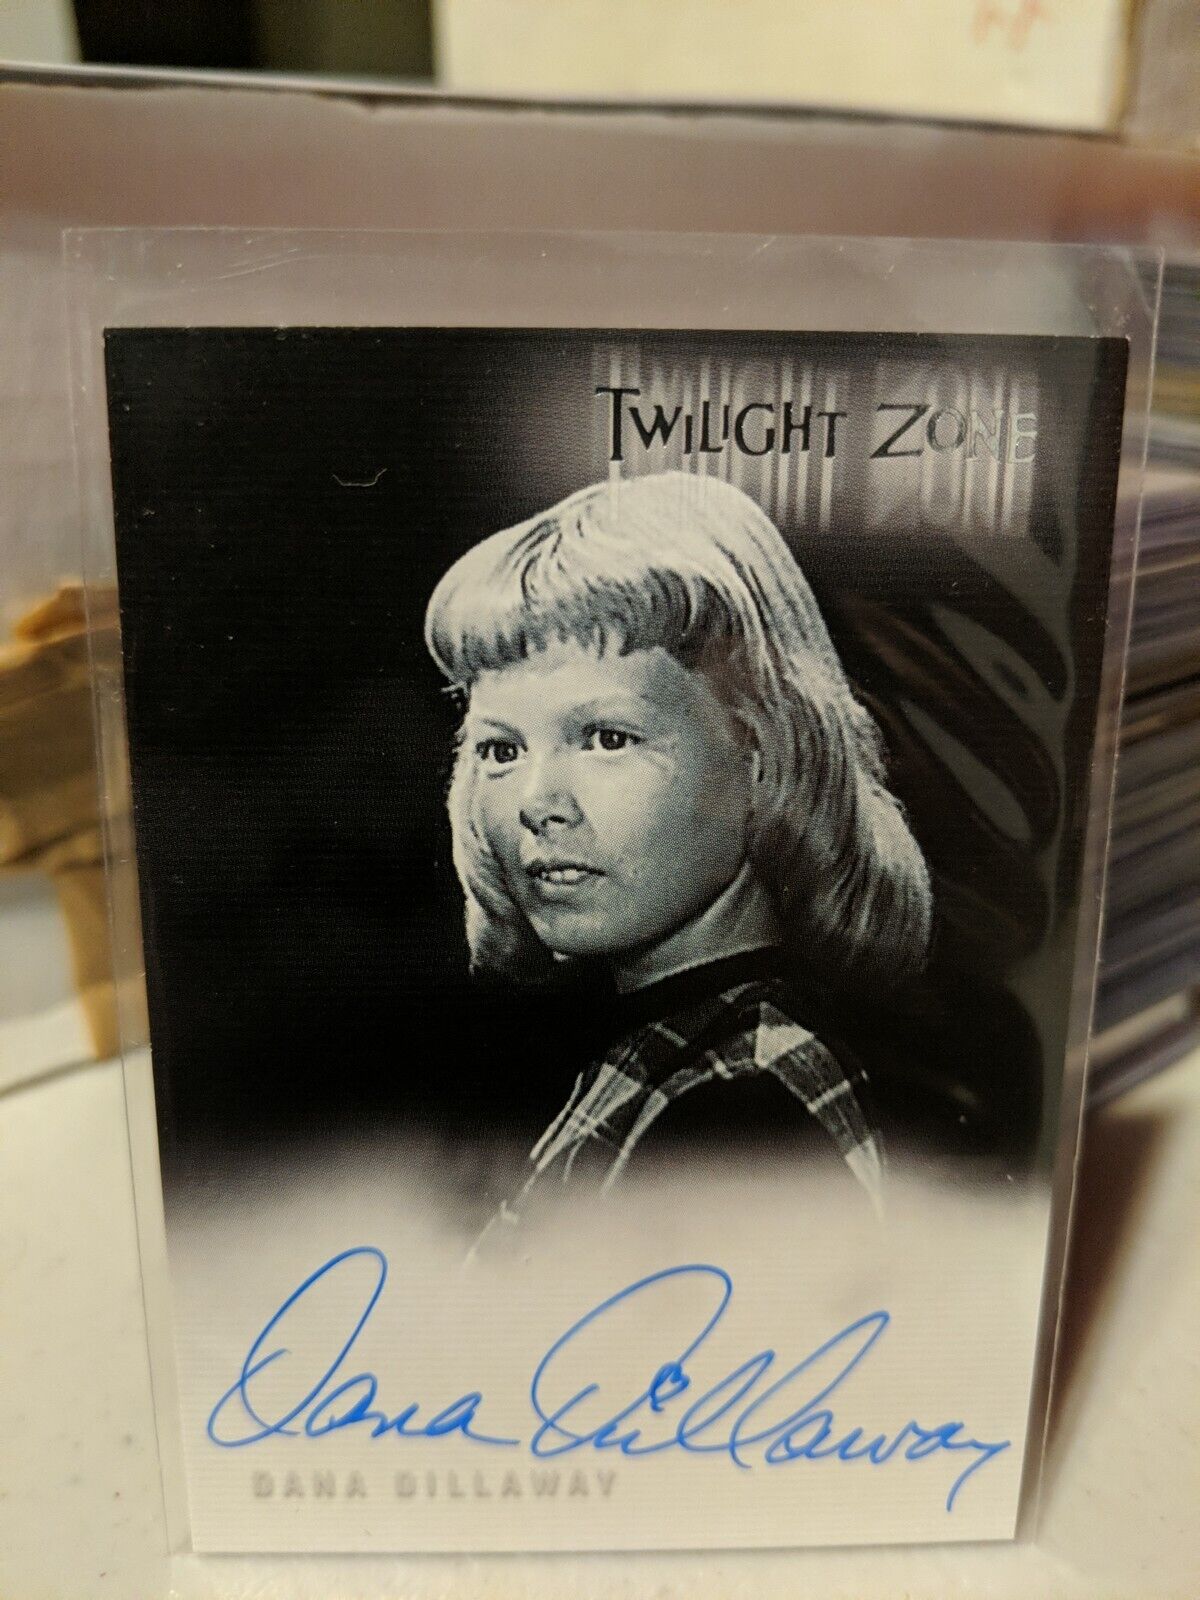 Twilight Zone Series 4 Dana Dillaway A78 Autograph Card 2005